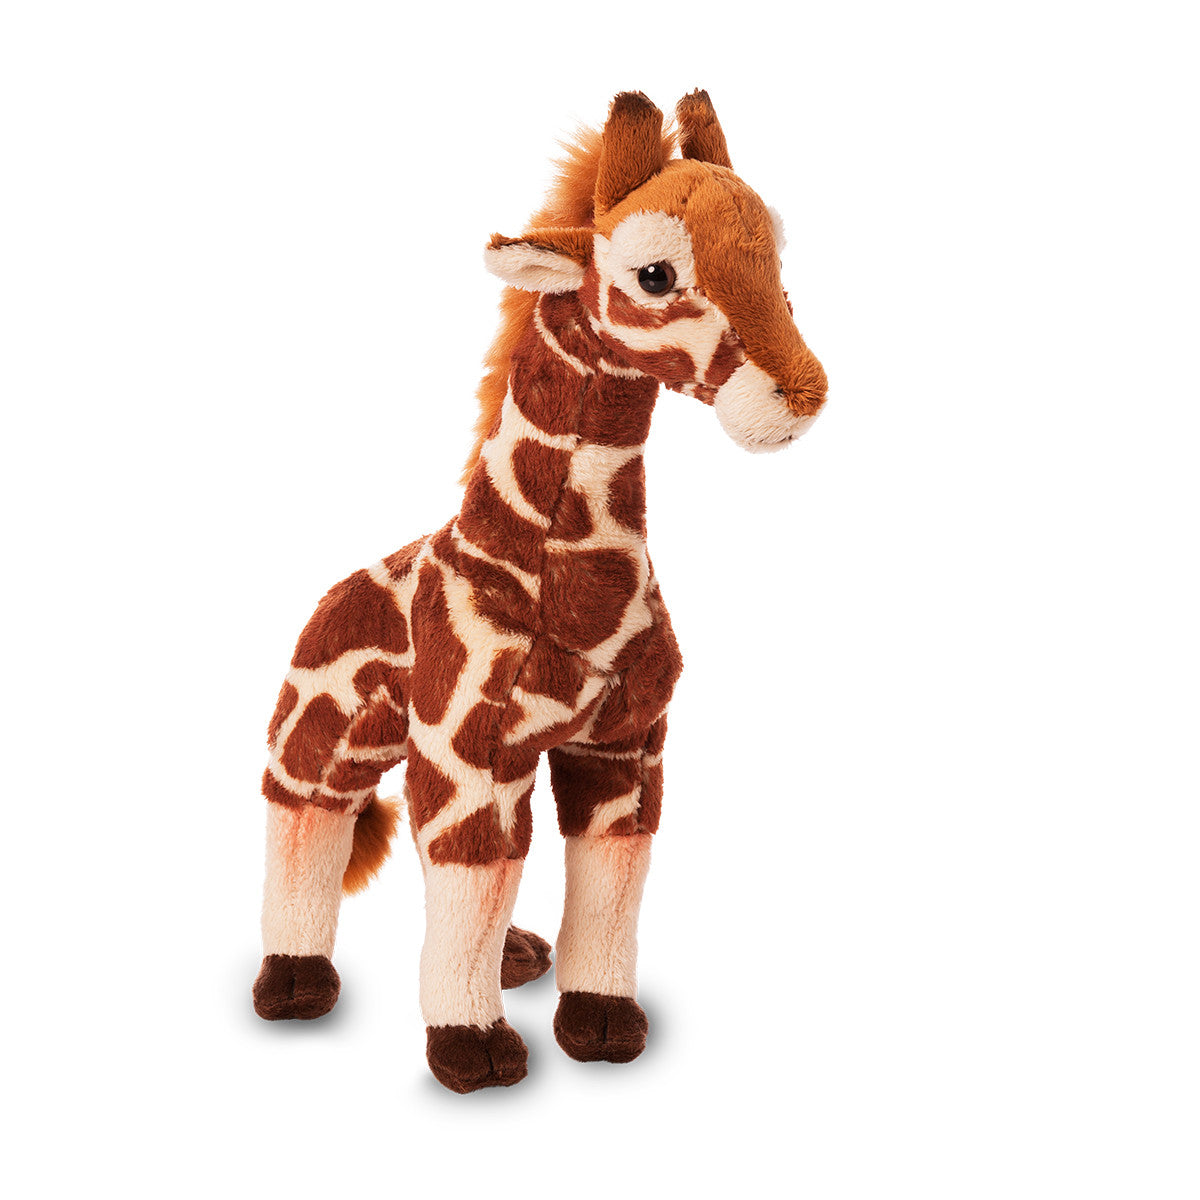 Girafe - WWF-Canada